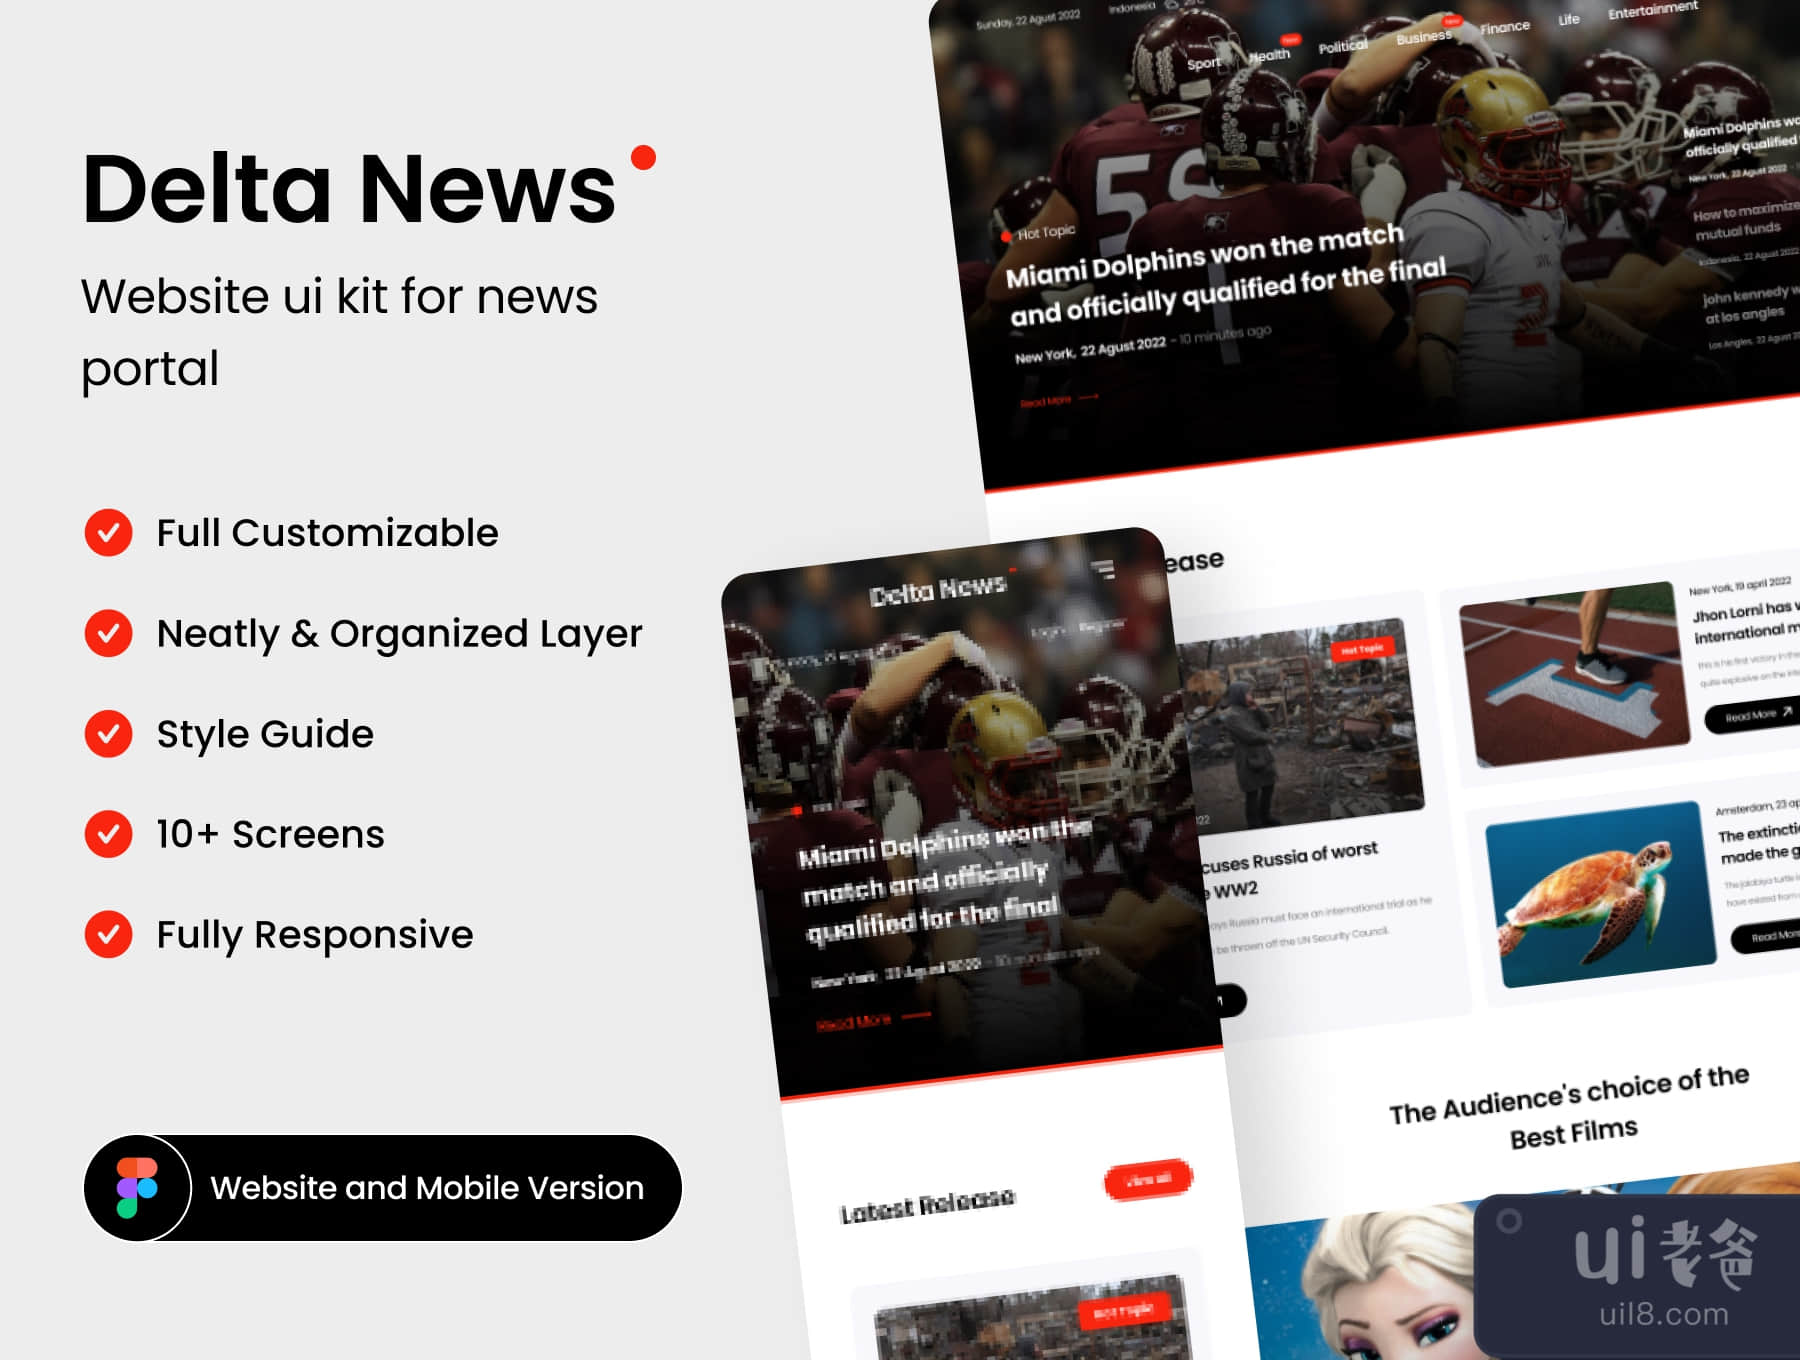 Delta News - 新闻门户的网站uikit (Delta News - Website uikit for news portal)插图5